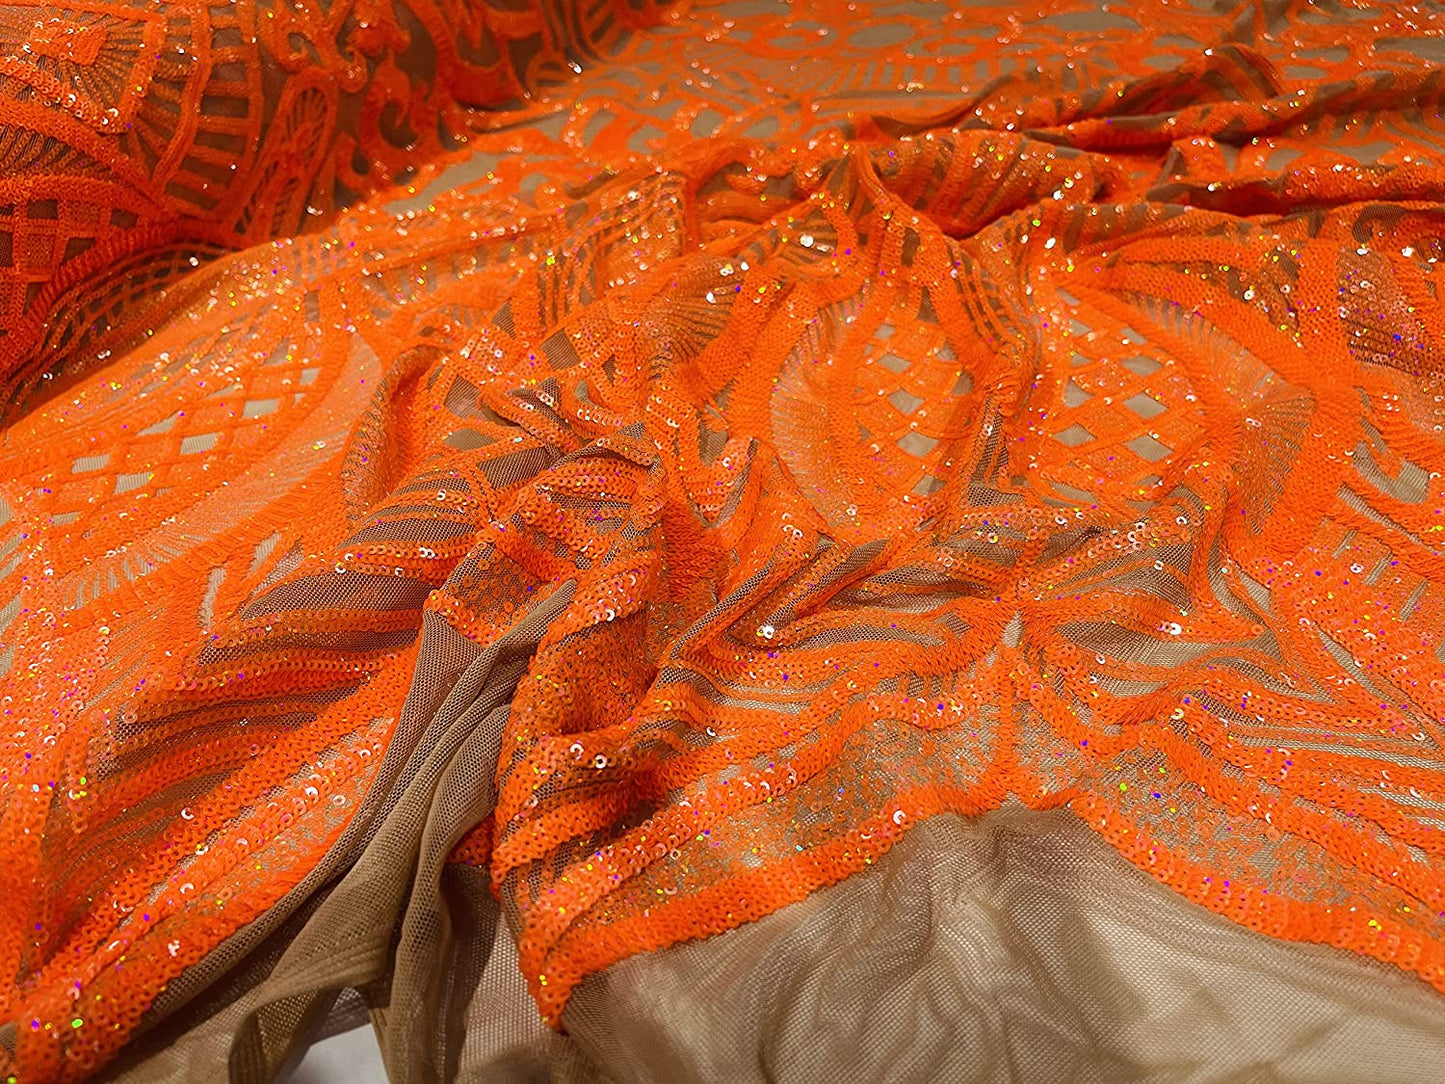 Iridescent Royalty Design On A 4 Way Stretch Mesh/Prom Fabric (1 Yard, Orange on Nude Mesh)